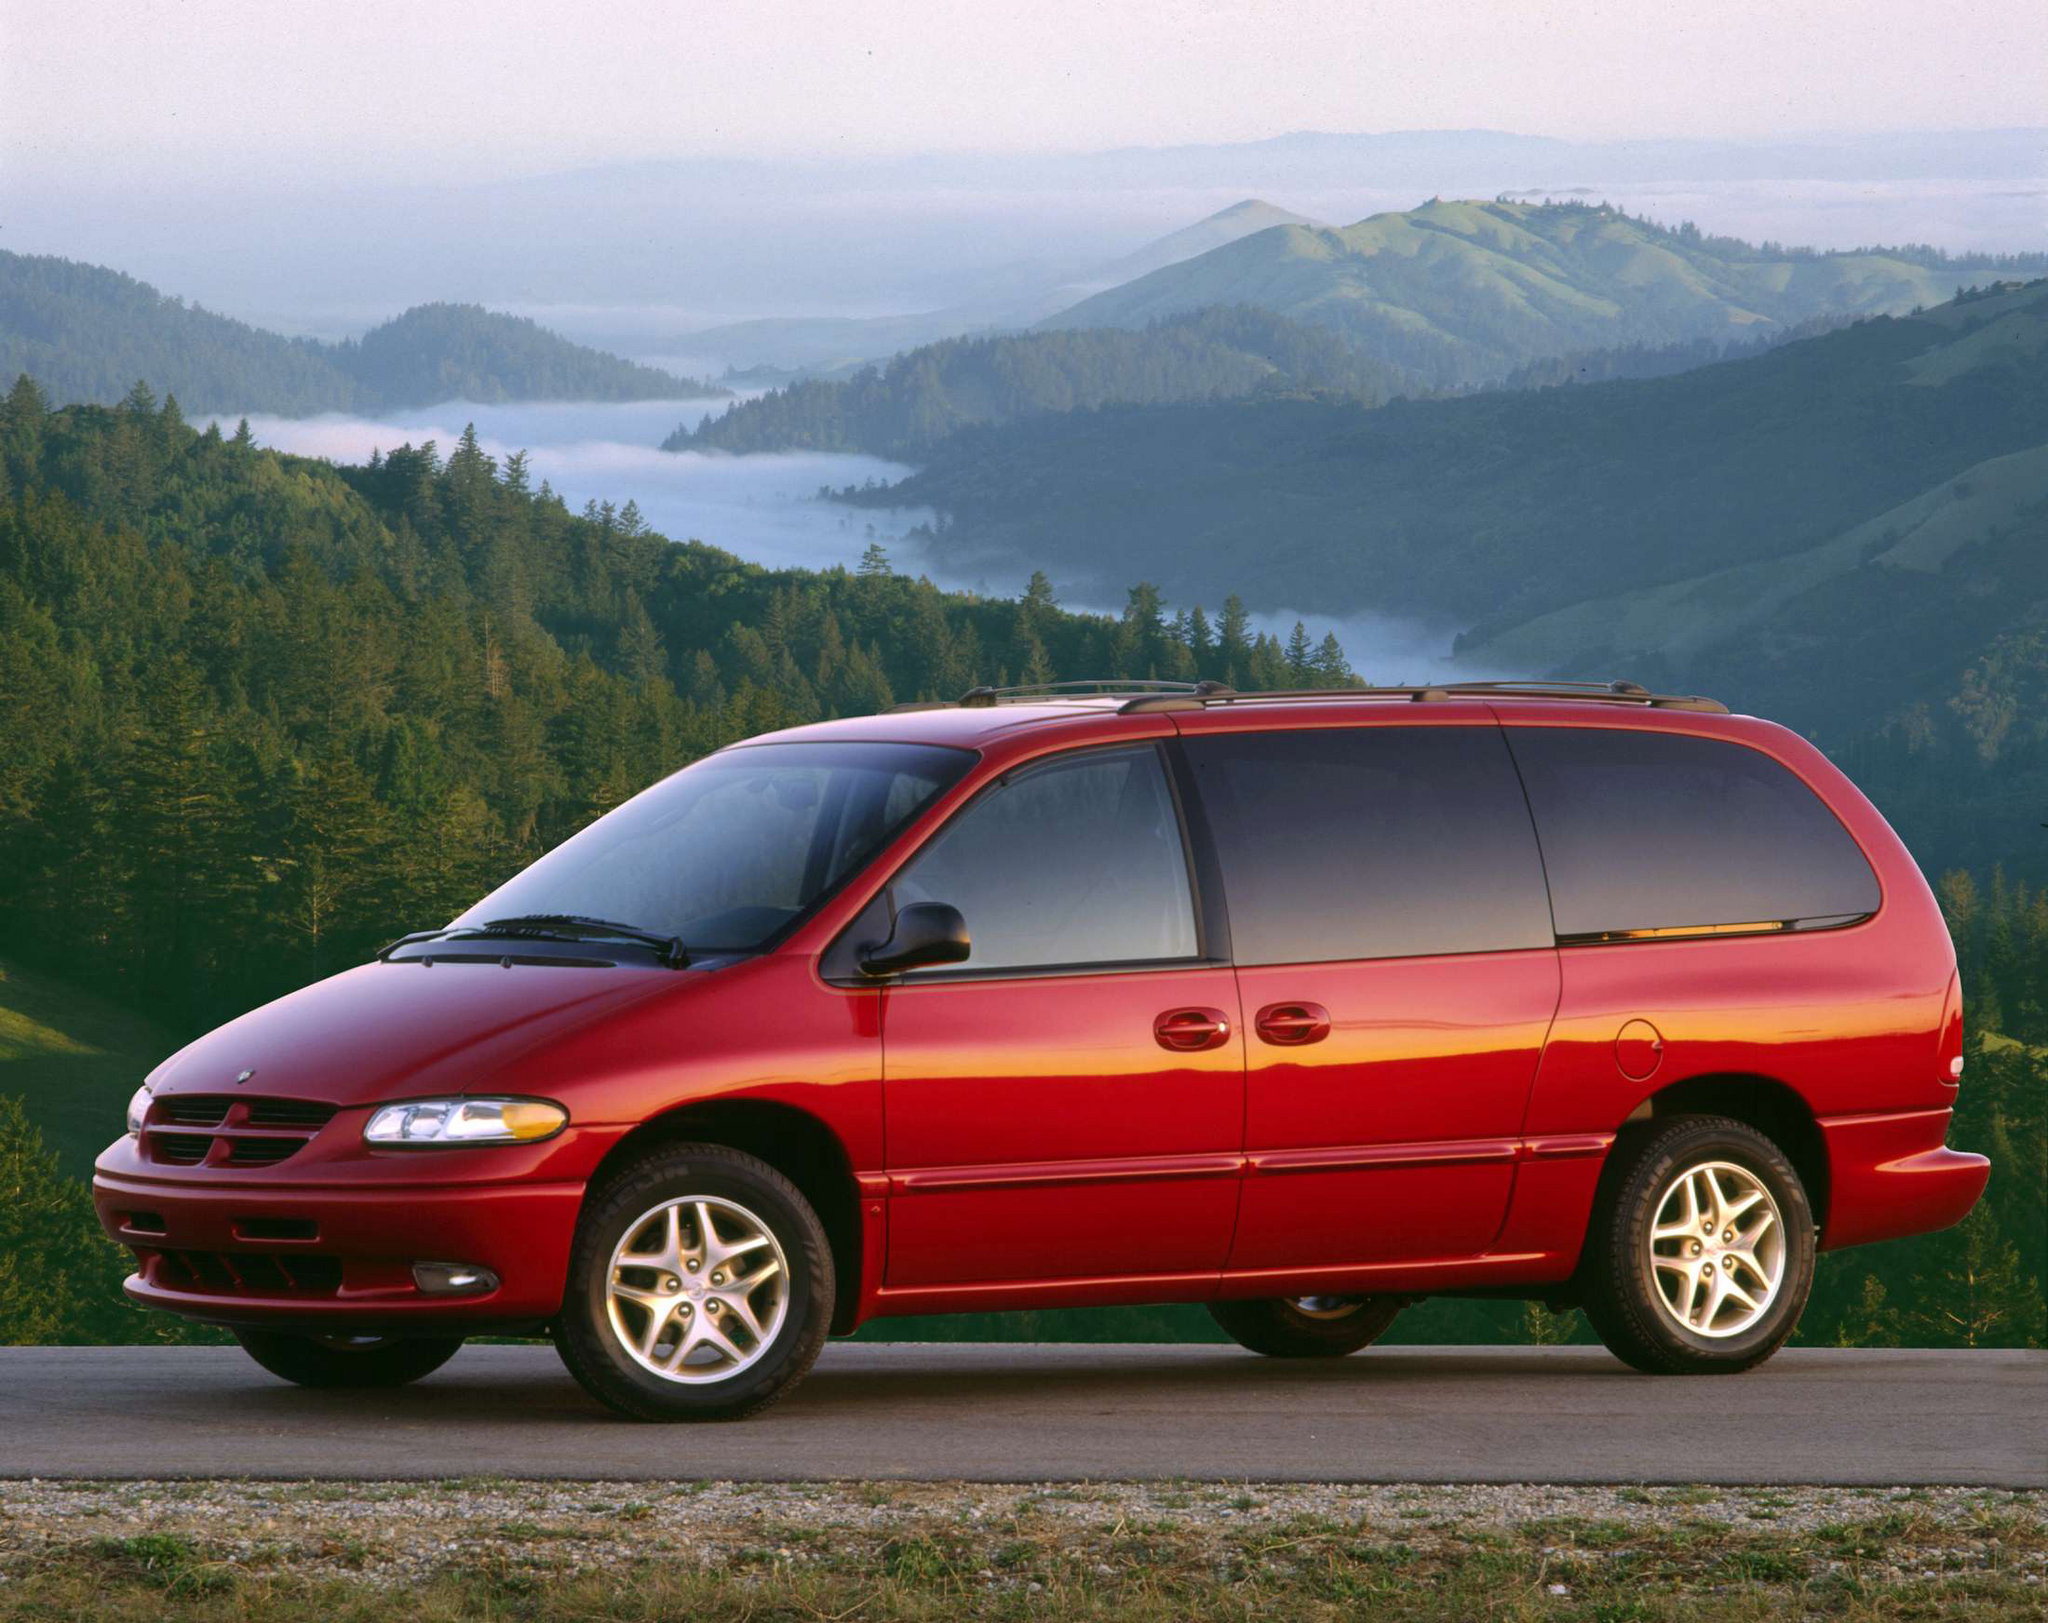 Додж вояджер. Dodge /Grand/ Caravan 2000. Dodge Grand Caravan 1995. Dodge Caravan 3. Dodge Caravan III 1995 – 2000.